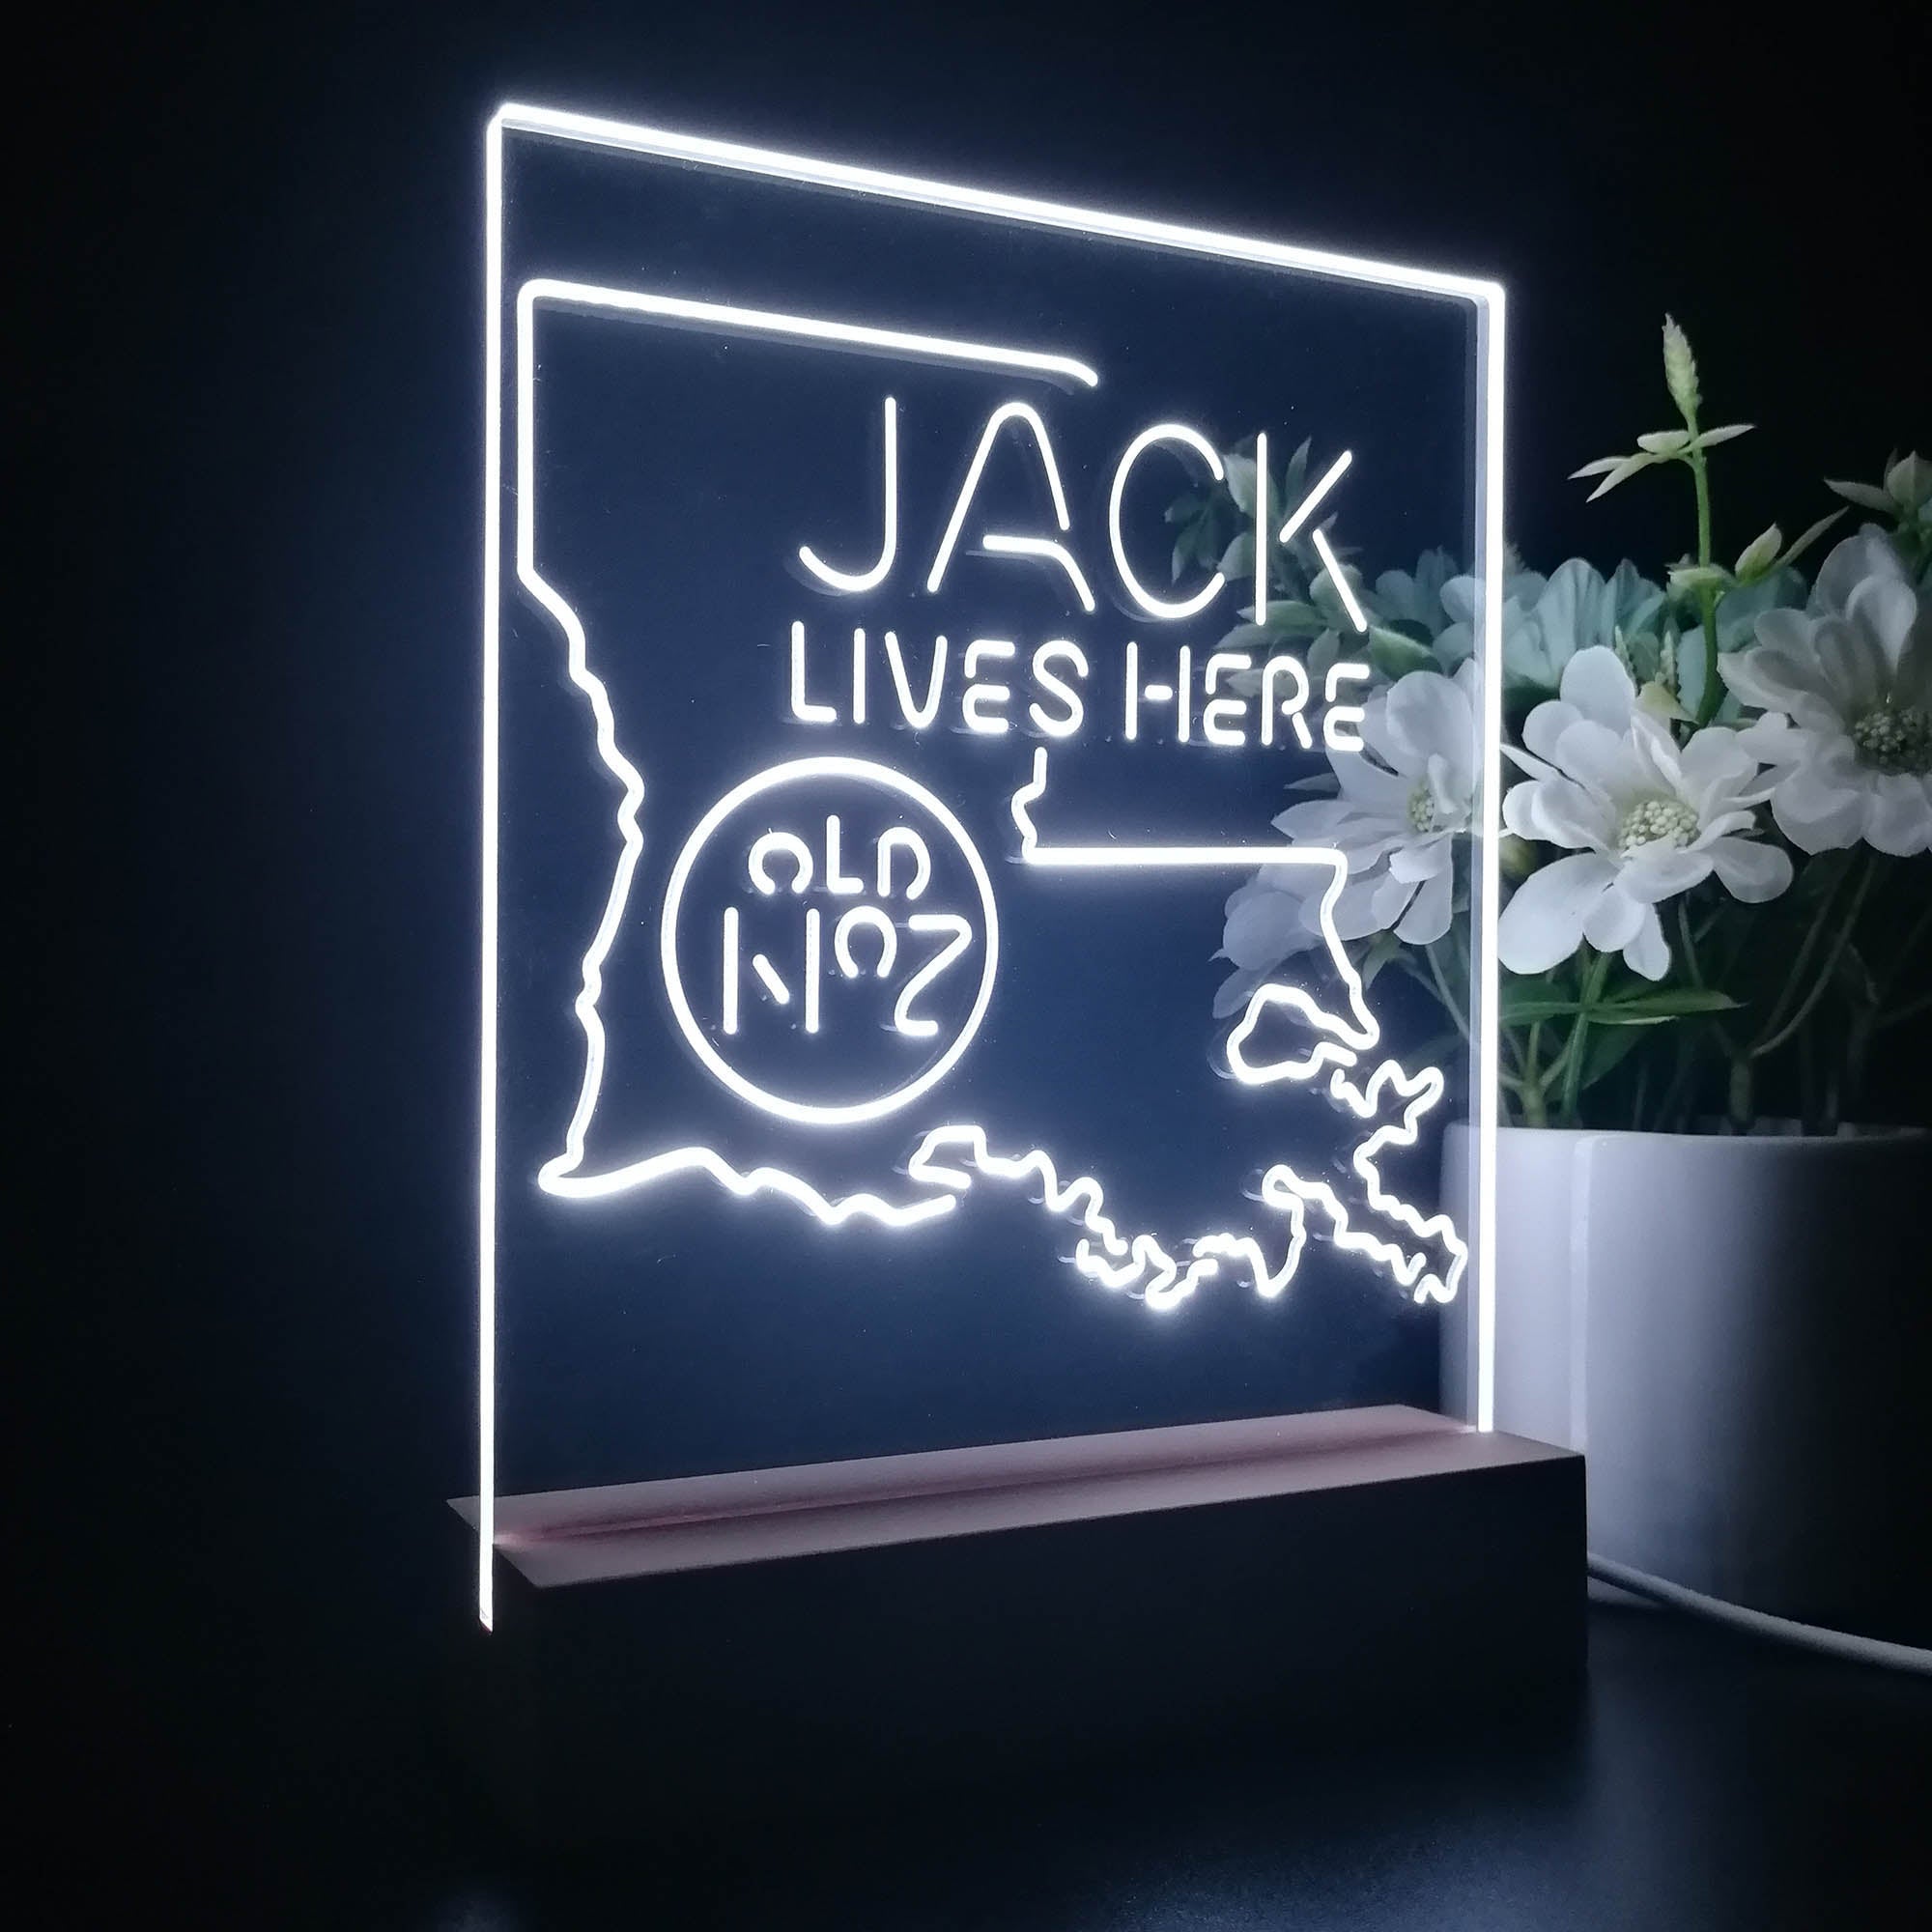 Louisiana Jack Lives Here 3D Illusion Night Light Desk Lamp